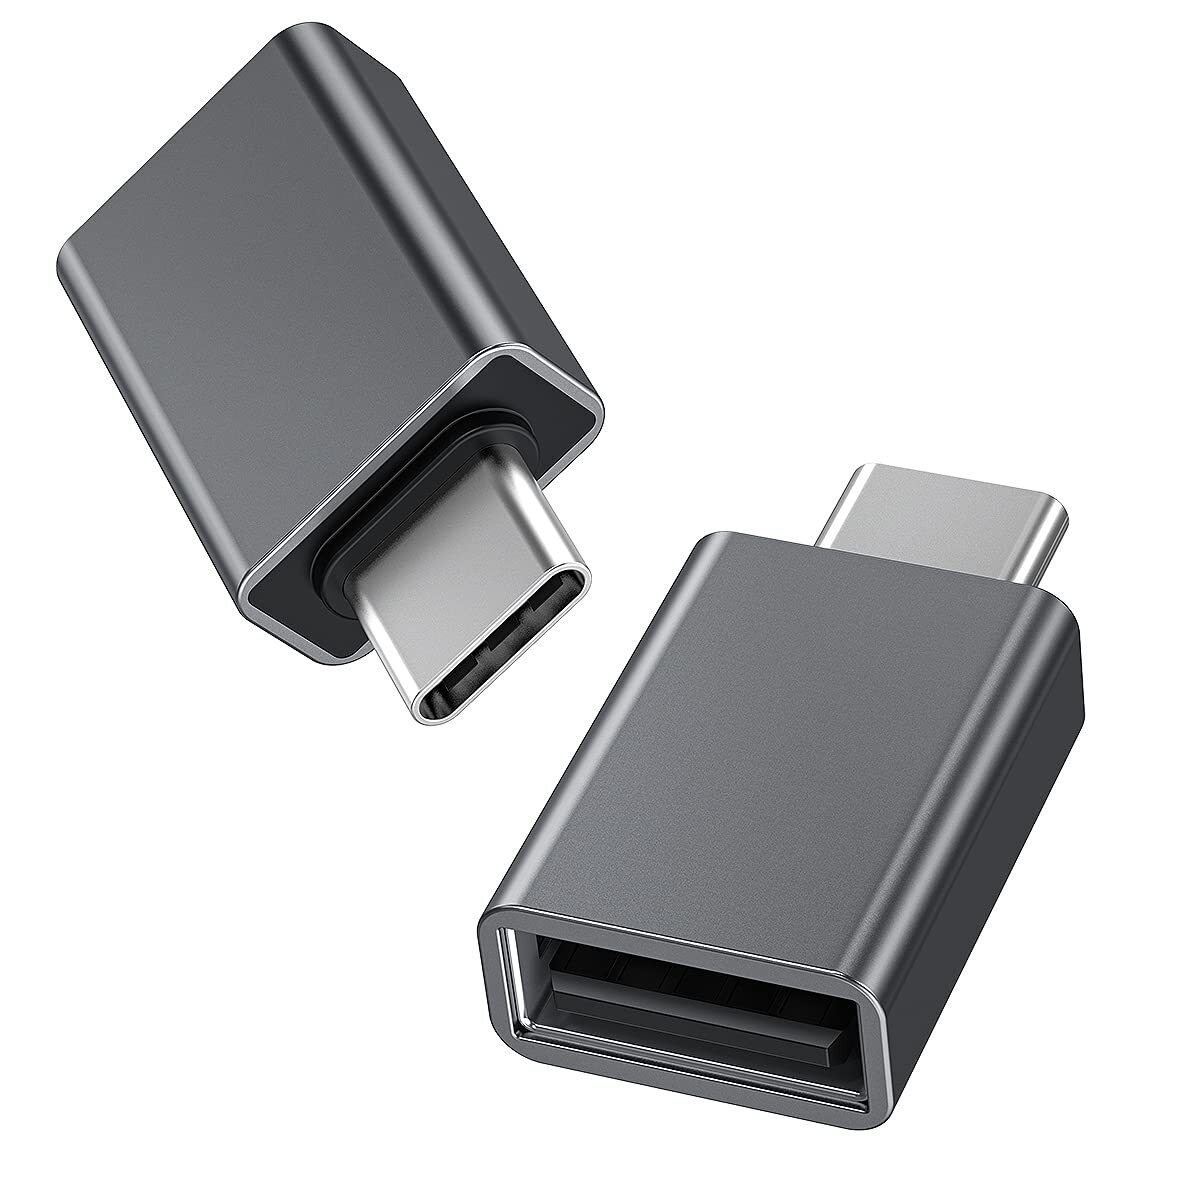 USB C to micro USB adapter